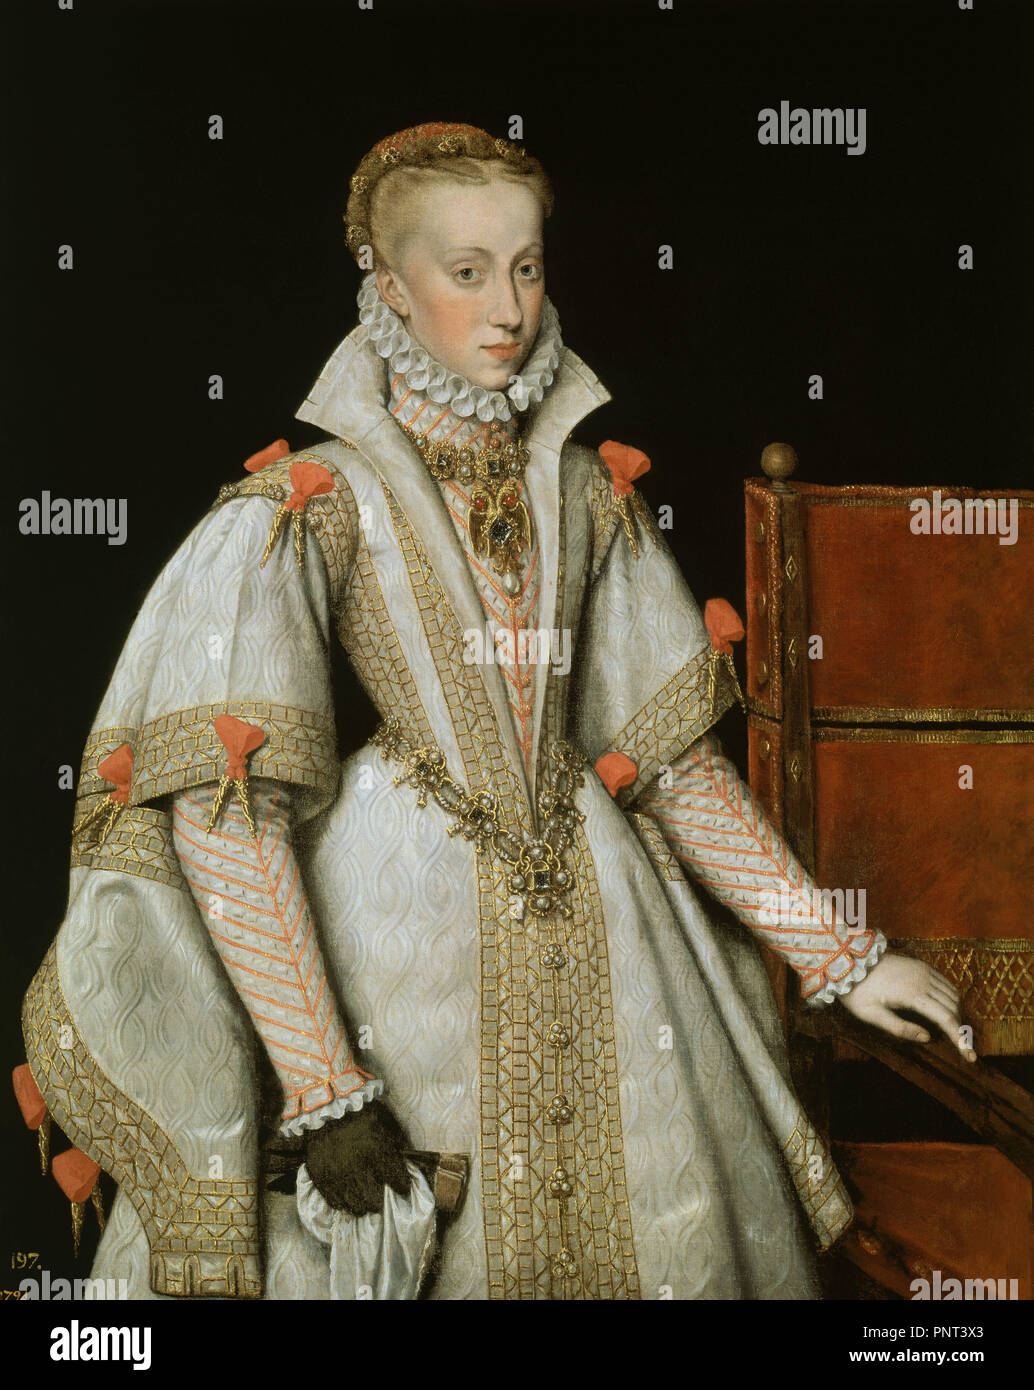 Copy from Moro. Anne of Austria. Fourth wife of Philip II. Madrid, Prado museum. Author: GONZALEZ, BARTOLOME. Location: MUSEO DEL PRADO-PINTURA. MADRID. SPAIN. Stock Photo